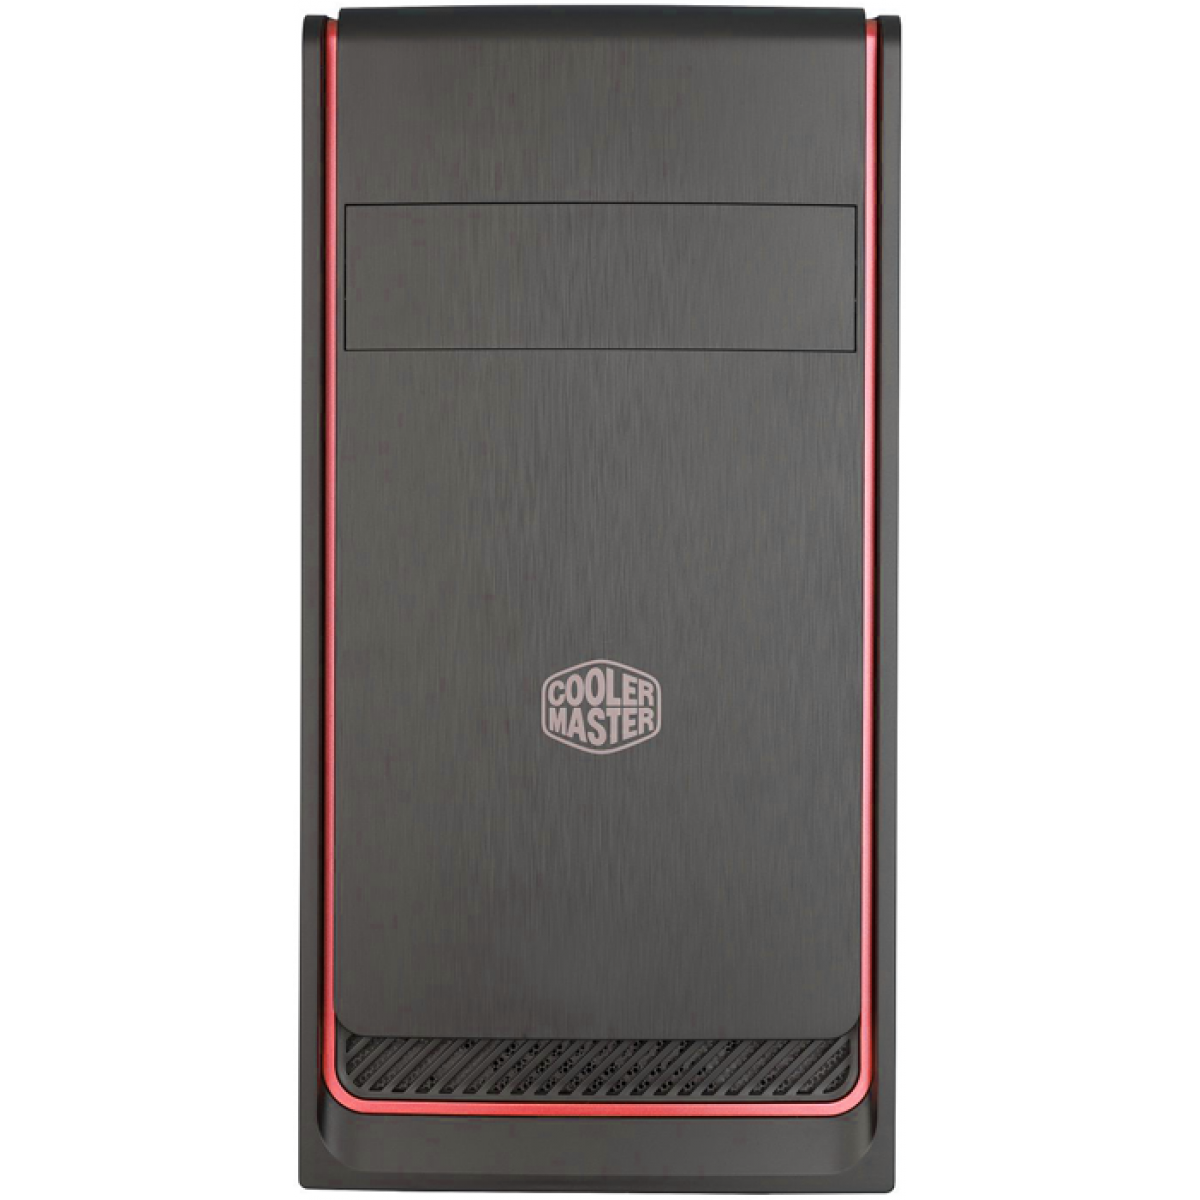 Gabinete Gamer Cooler Master Masterbox E300L, Mini Tower, Black/Red, Sem Fonte, Com 1 Fan, MCB-E300L-KN5N-B00